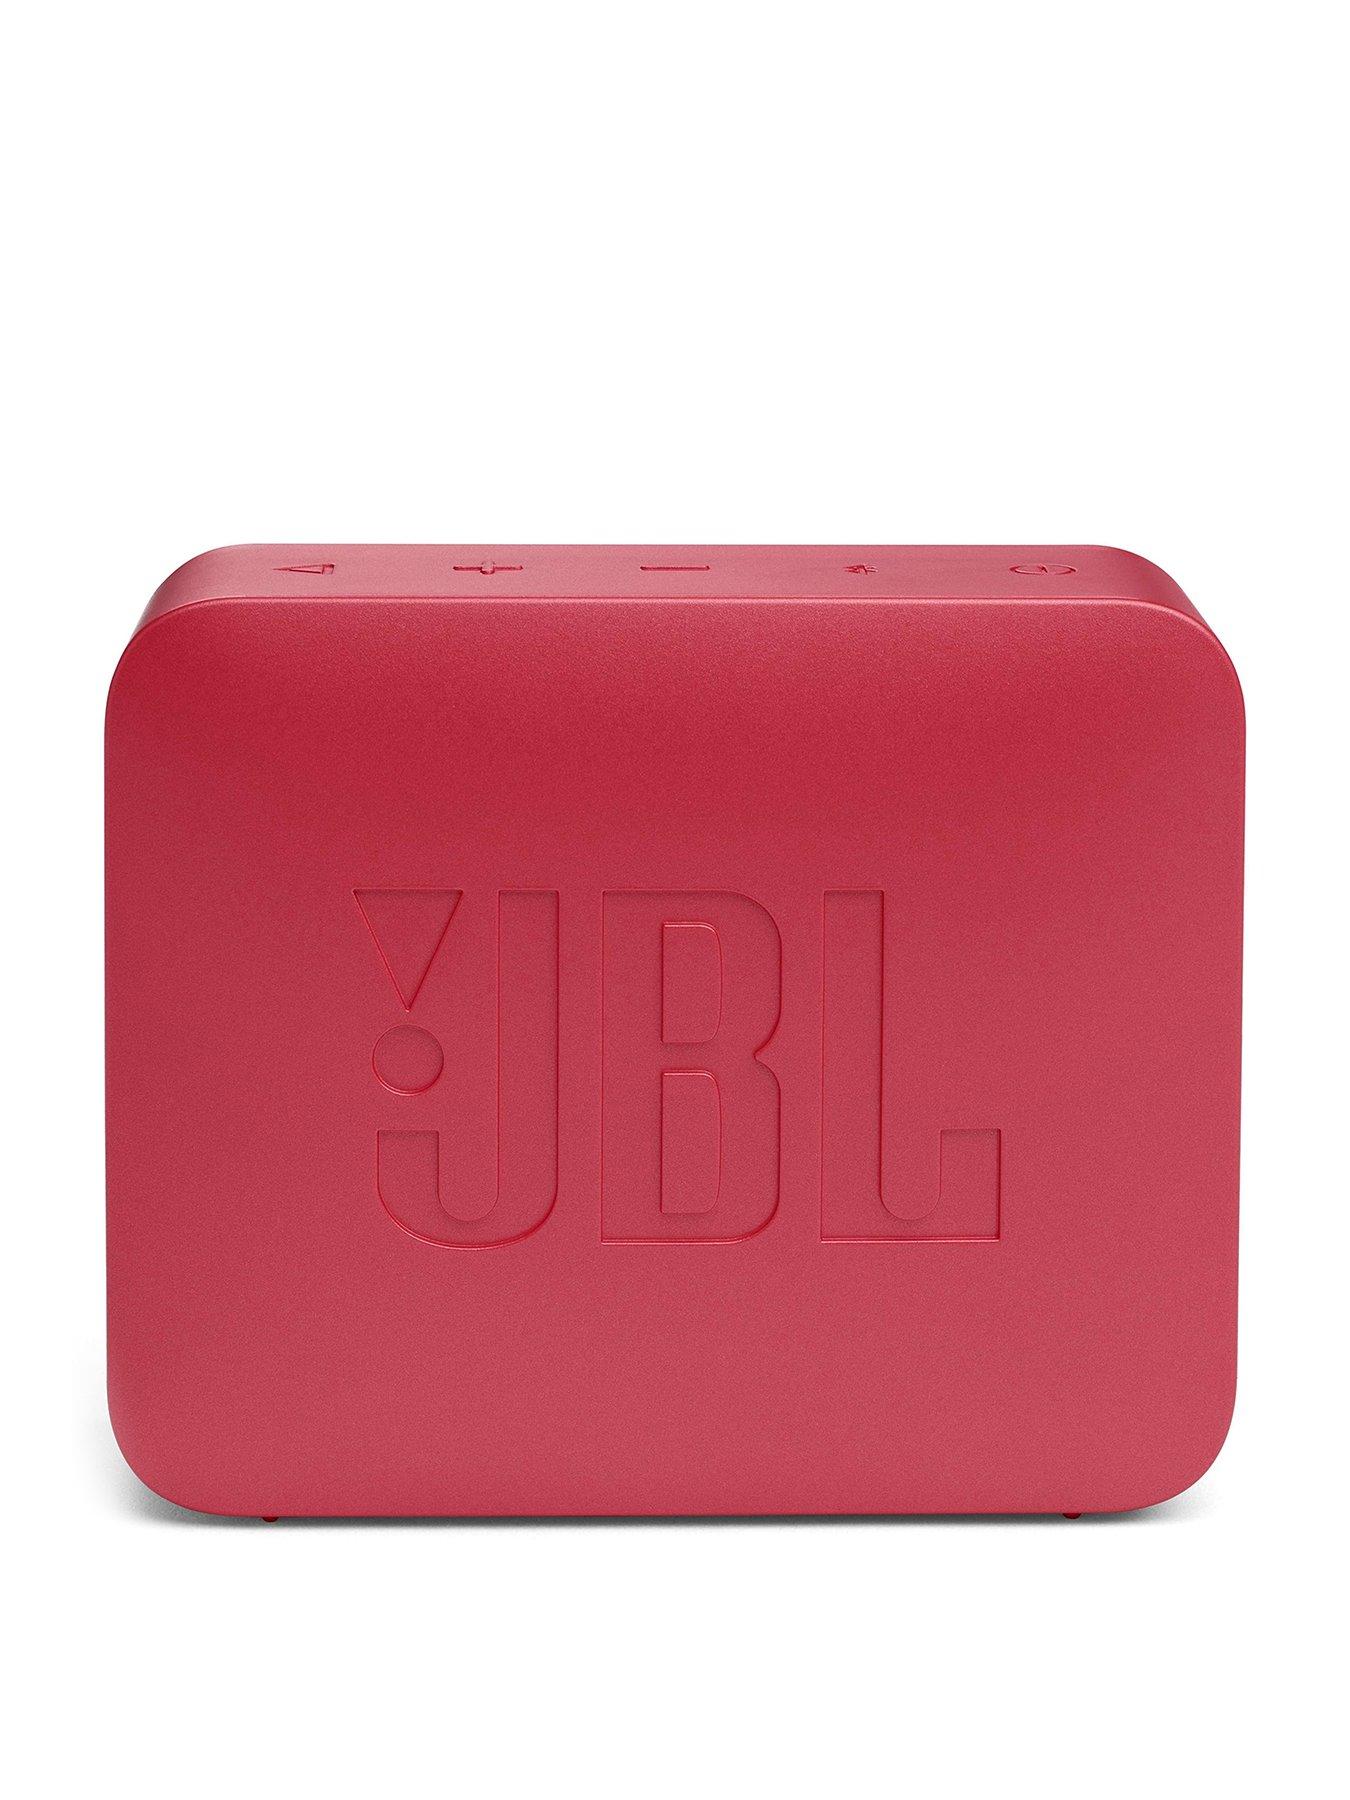 JBL Go 2 - The new model of the most popular JBL